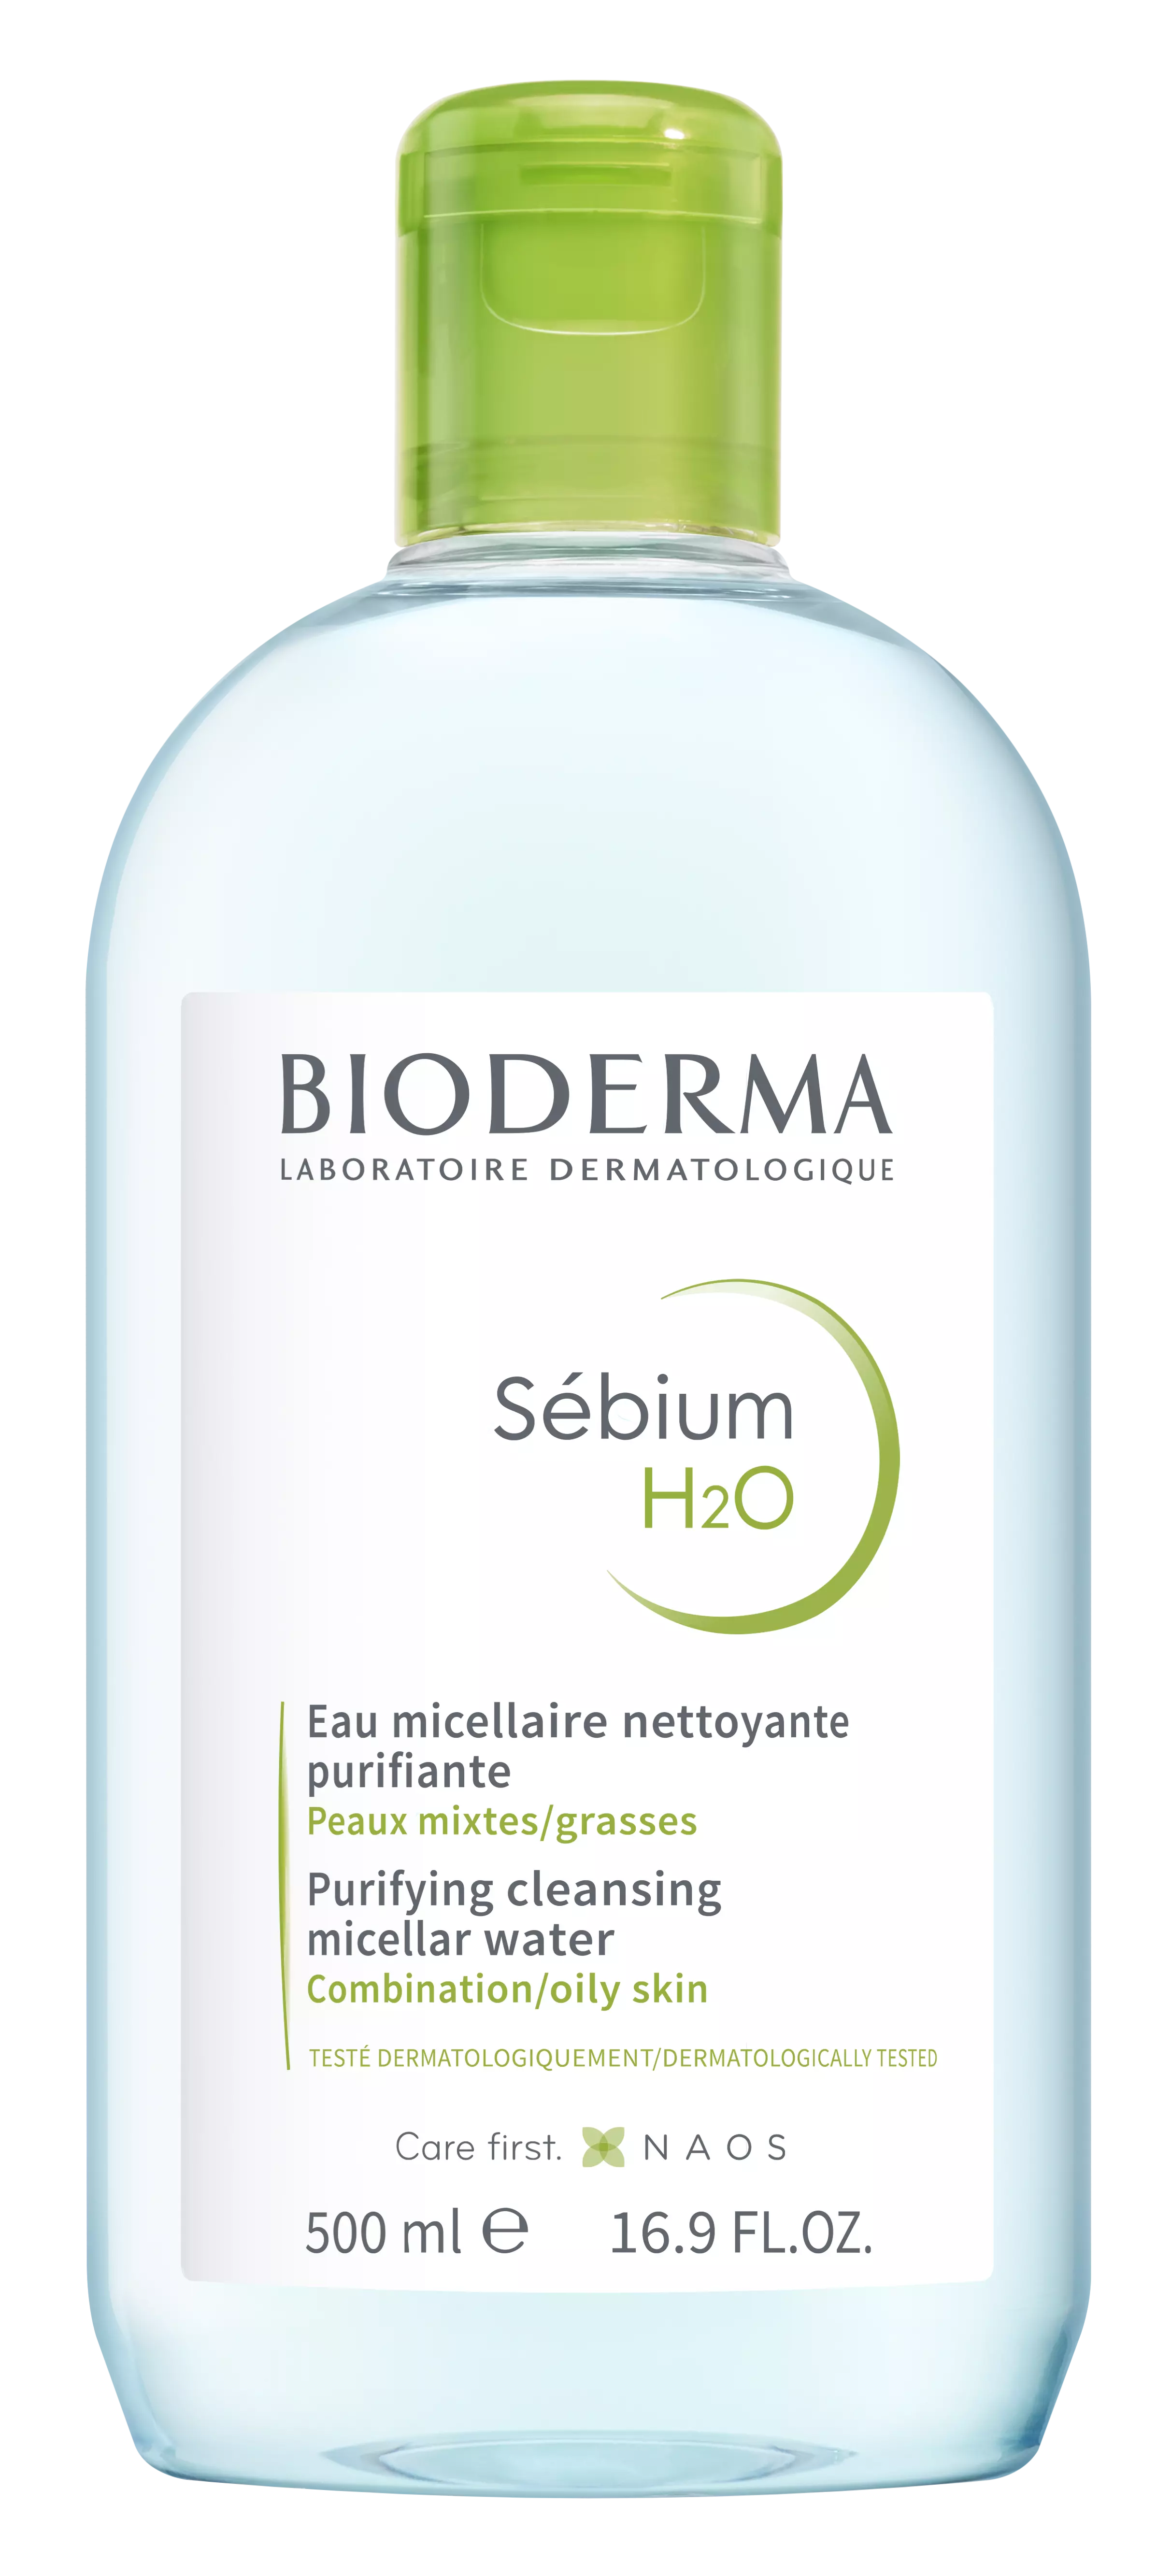 Bioderma Sébium H2O arc-és sminklemosó 500 ml